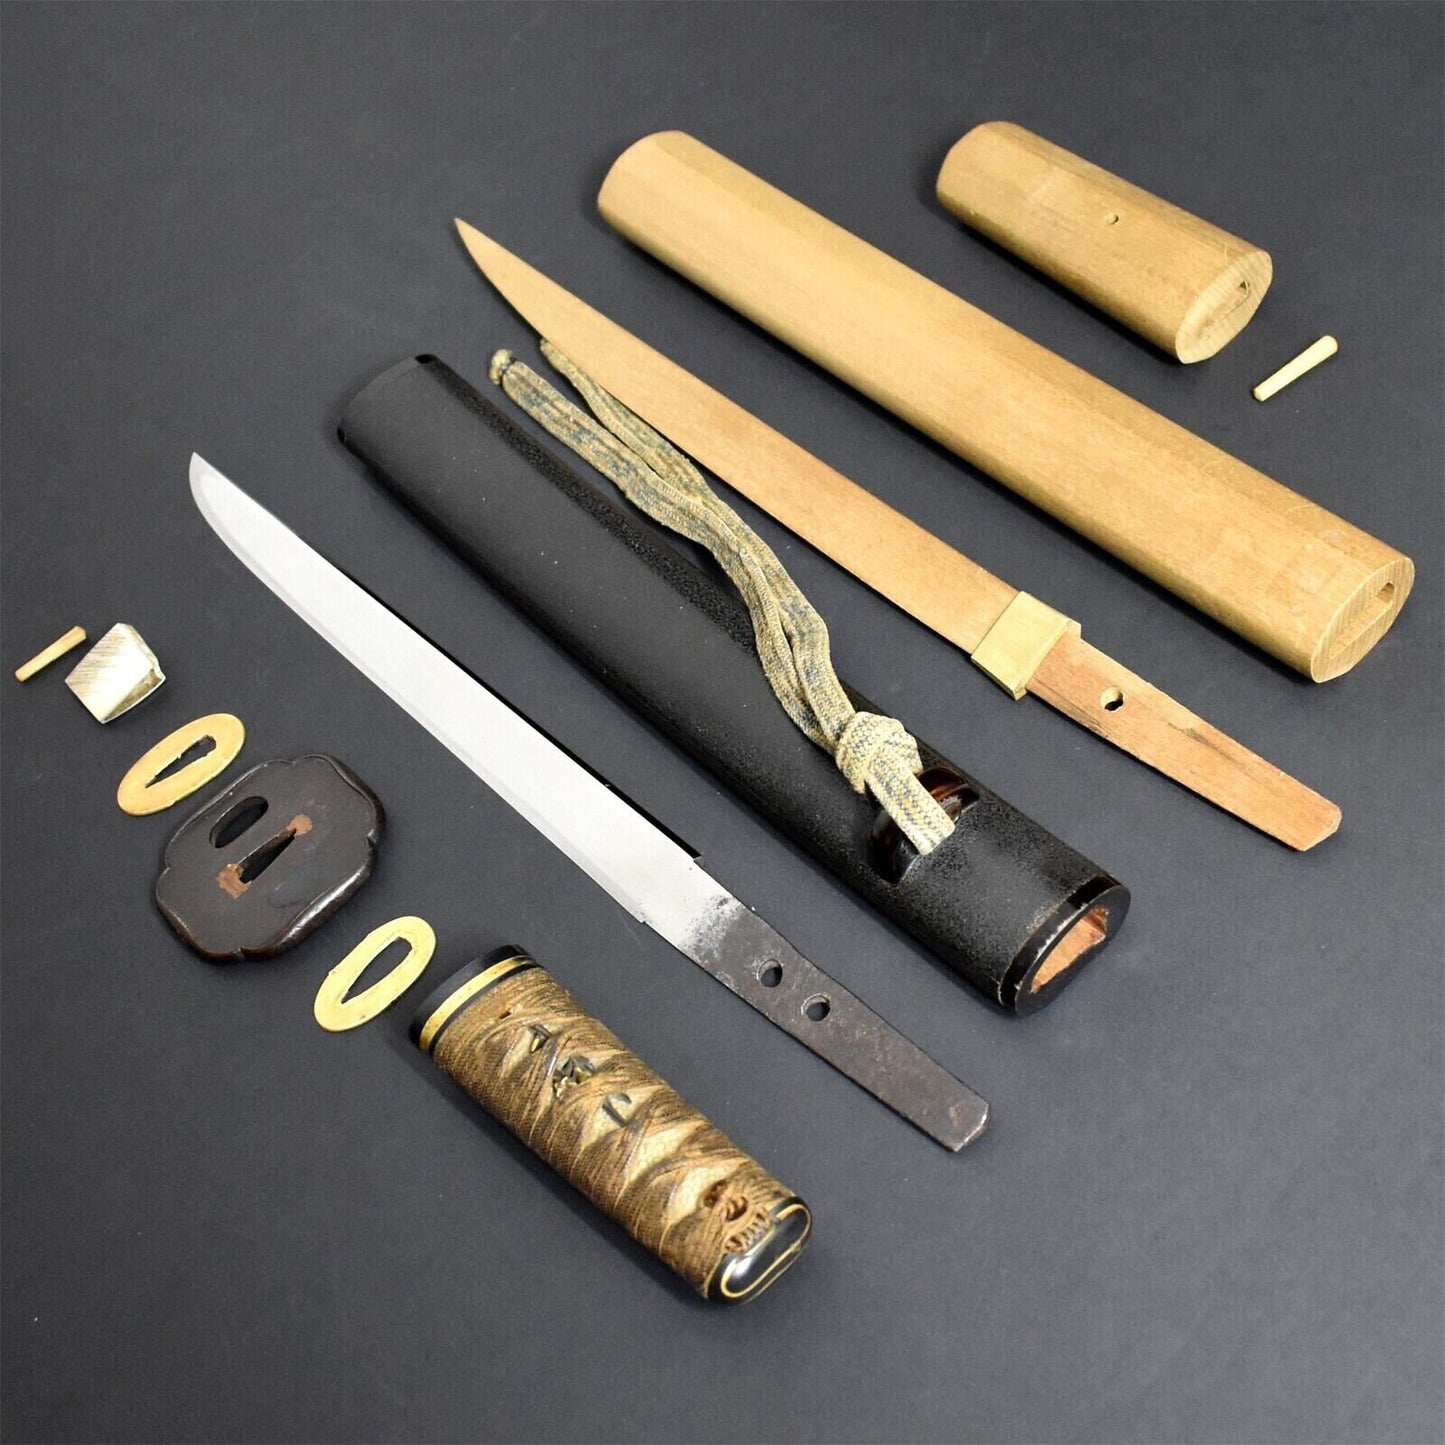 Collectible Genuine Unique Ancient Katana Sword Samurai Asian Tanto Ryoukai Tamahagane Material Vintage Weapon Muromachi Era Period Original.